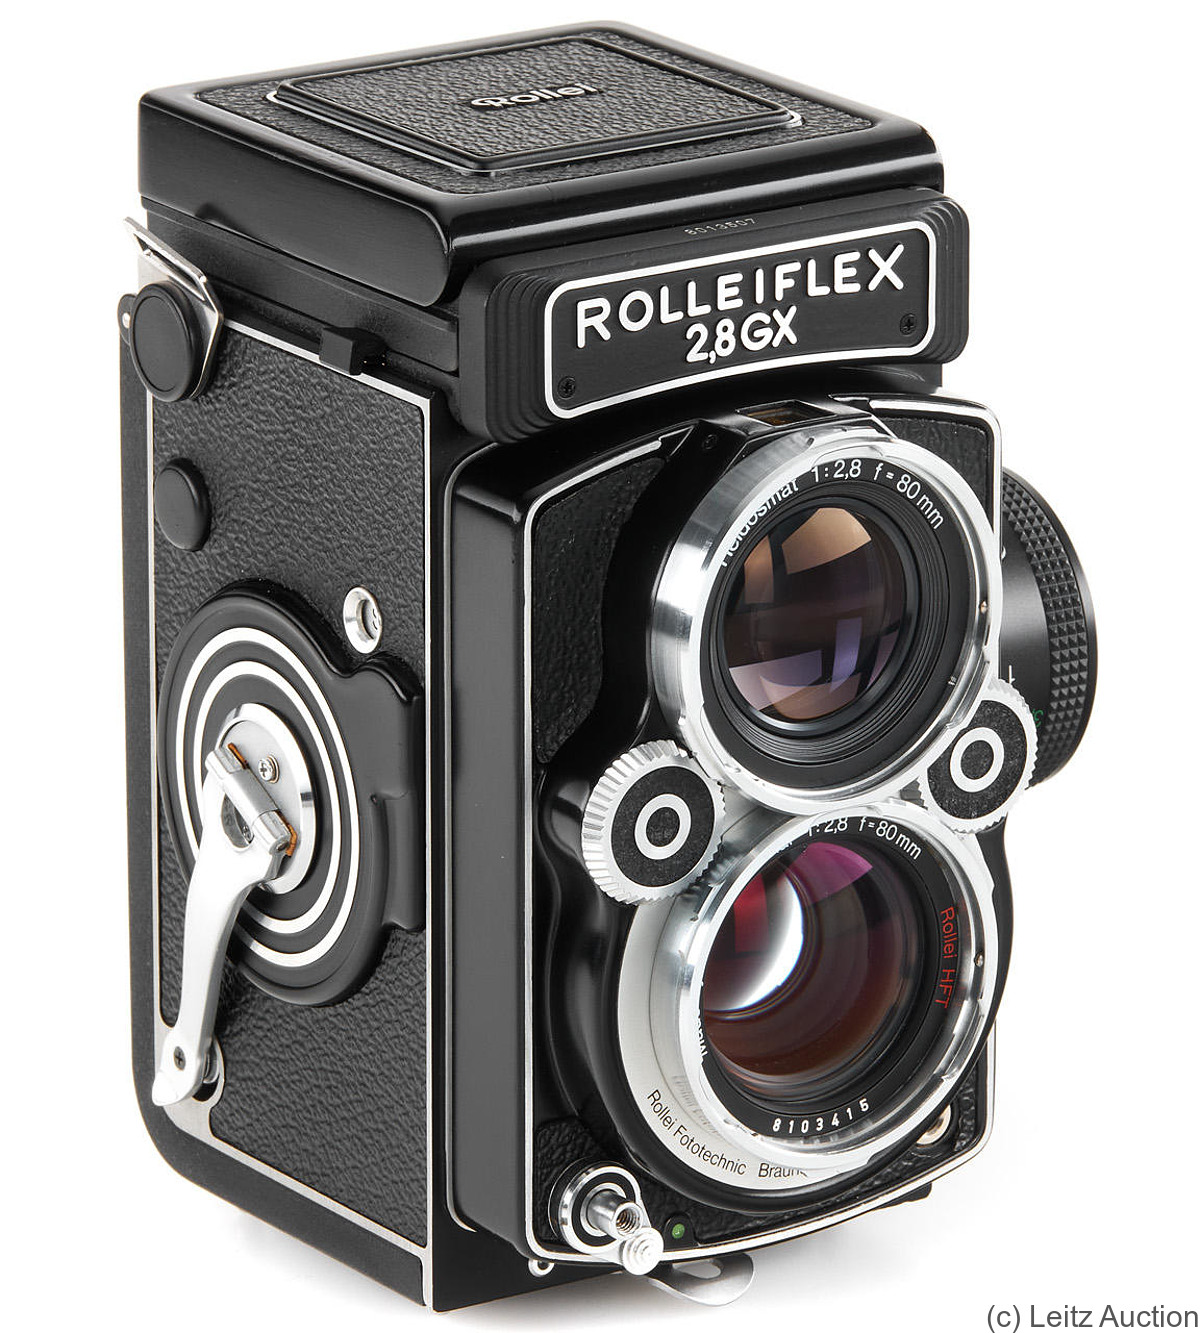 Rollei: Rolleiflex 2.8 GX camera